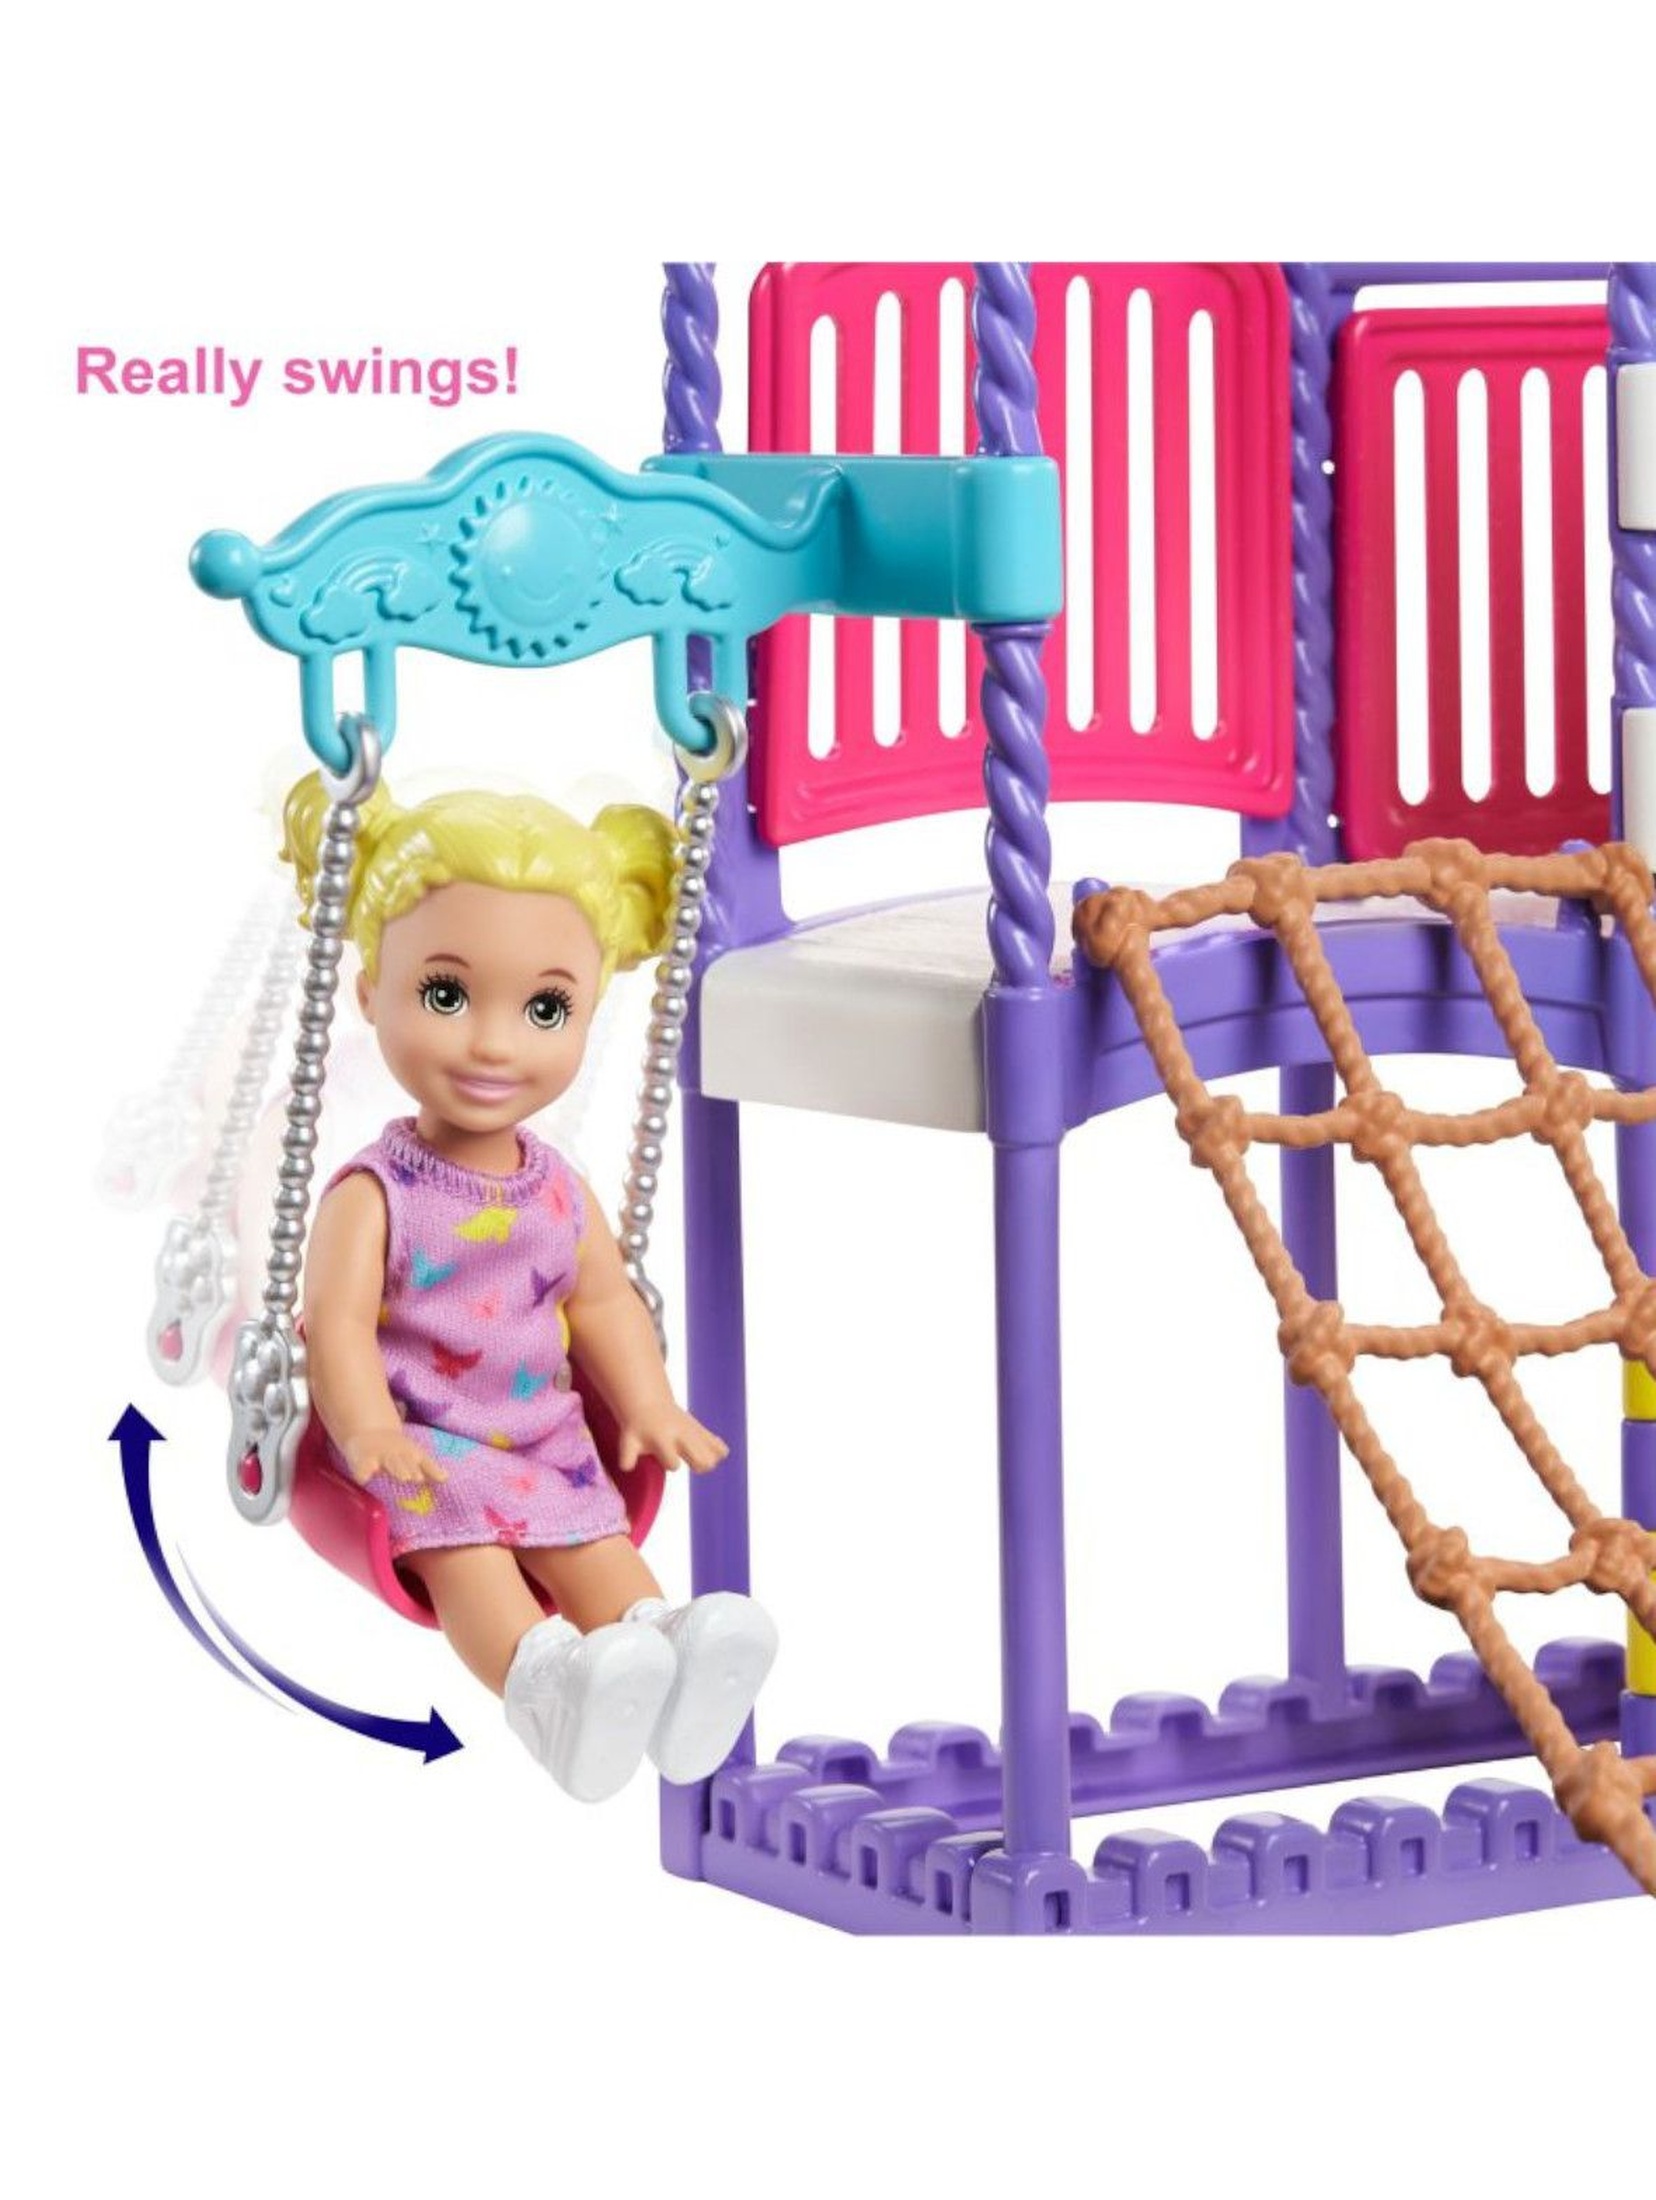 Barbie Skipper Klub opiekunek - Plac zabaw wiek 3+